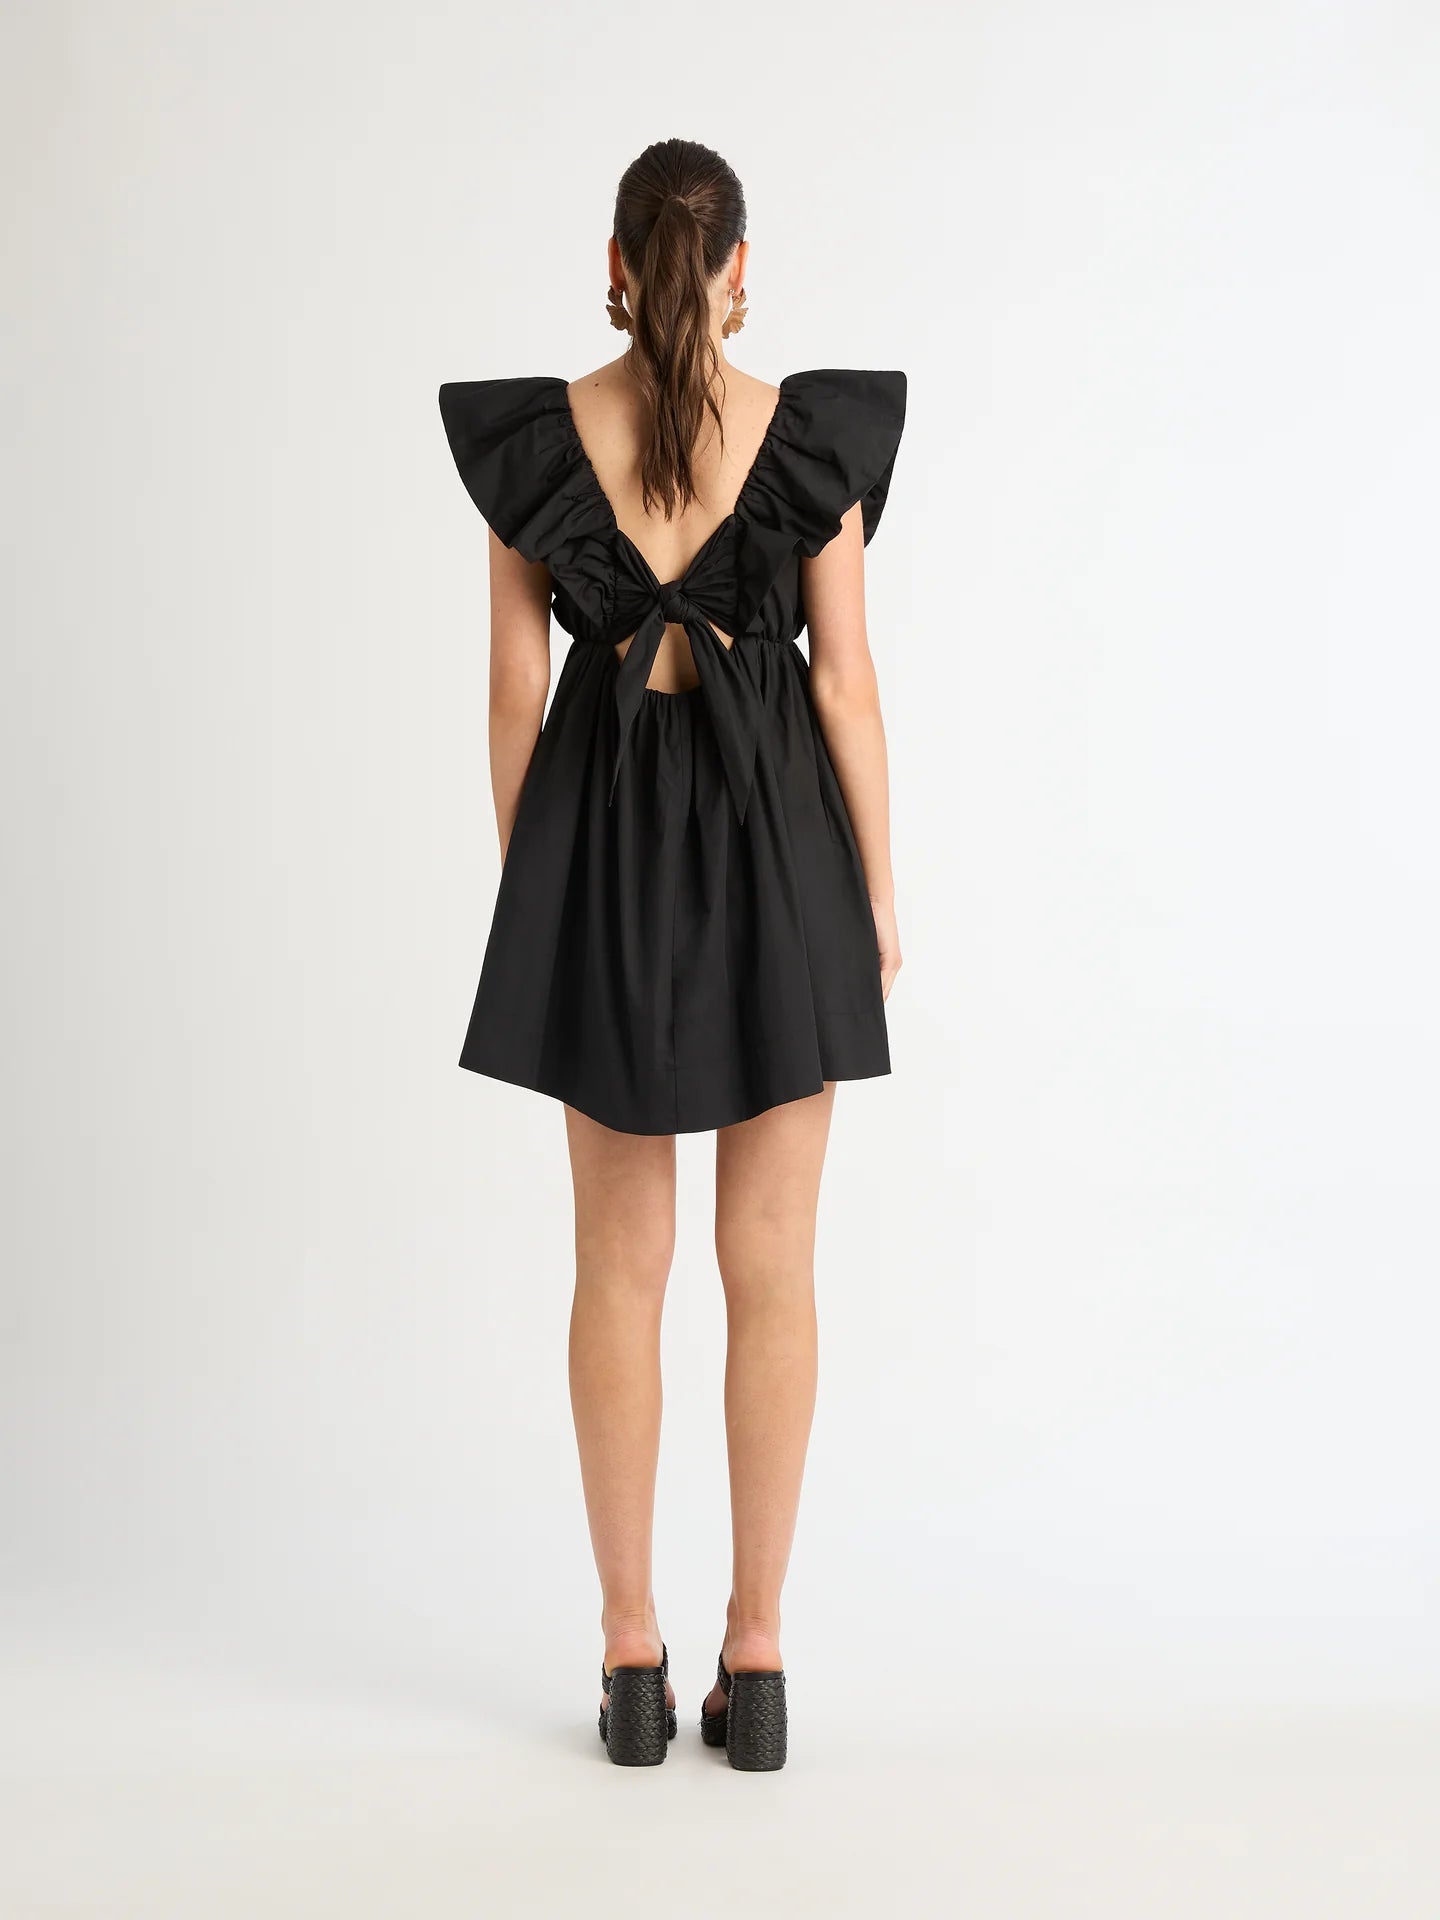 Bermuda mini dress black